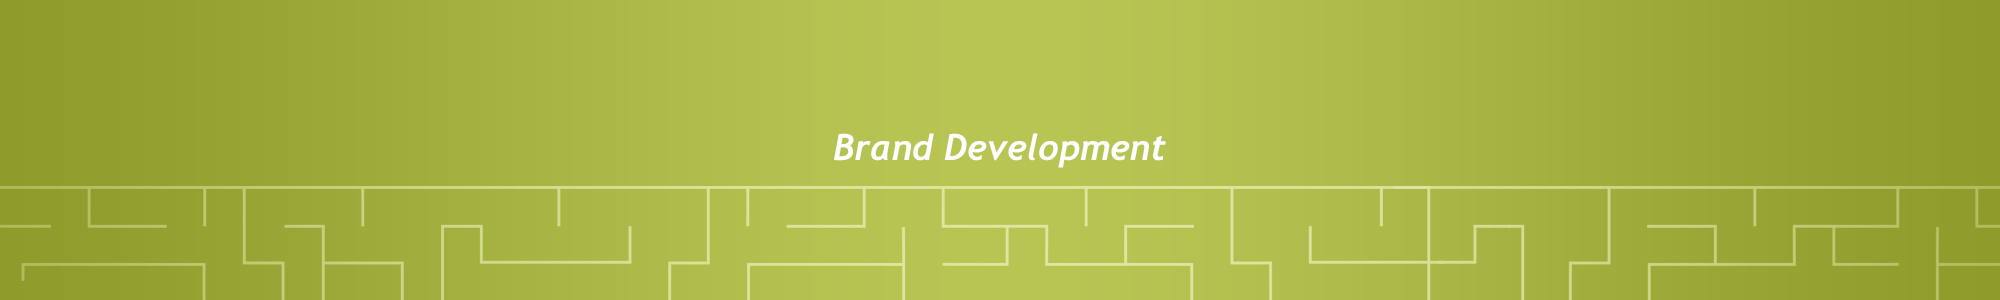 brand development